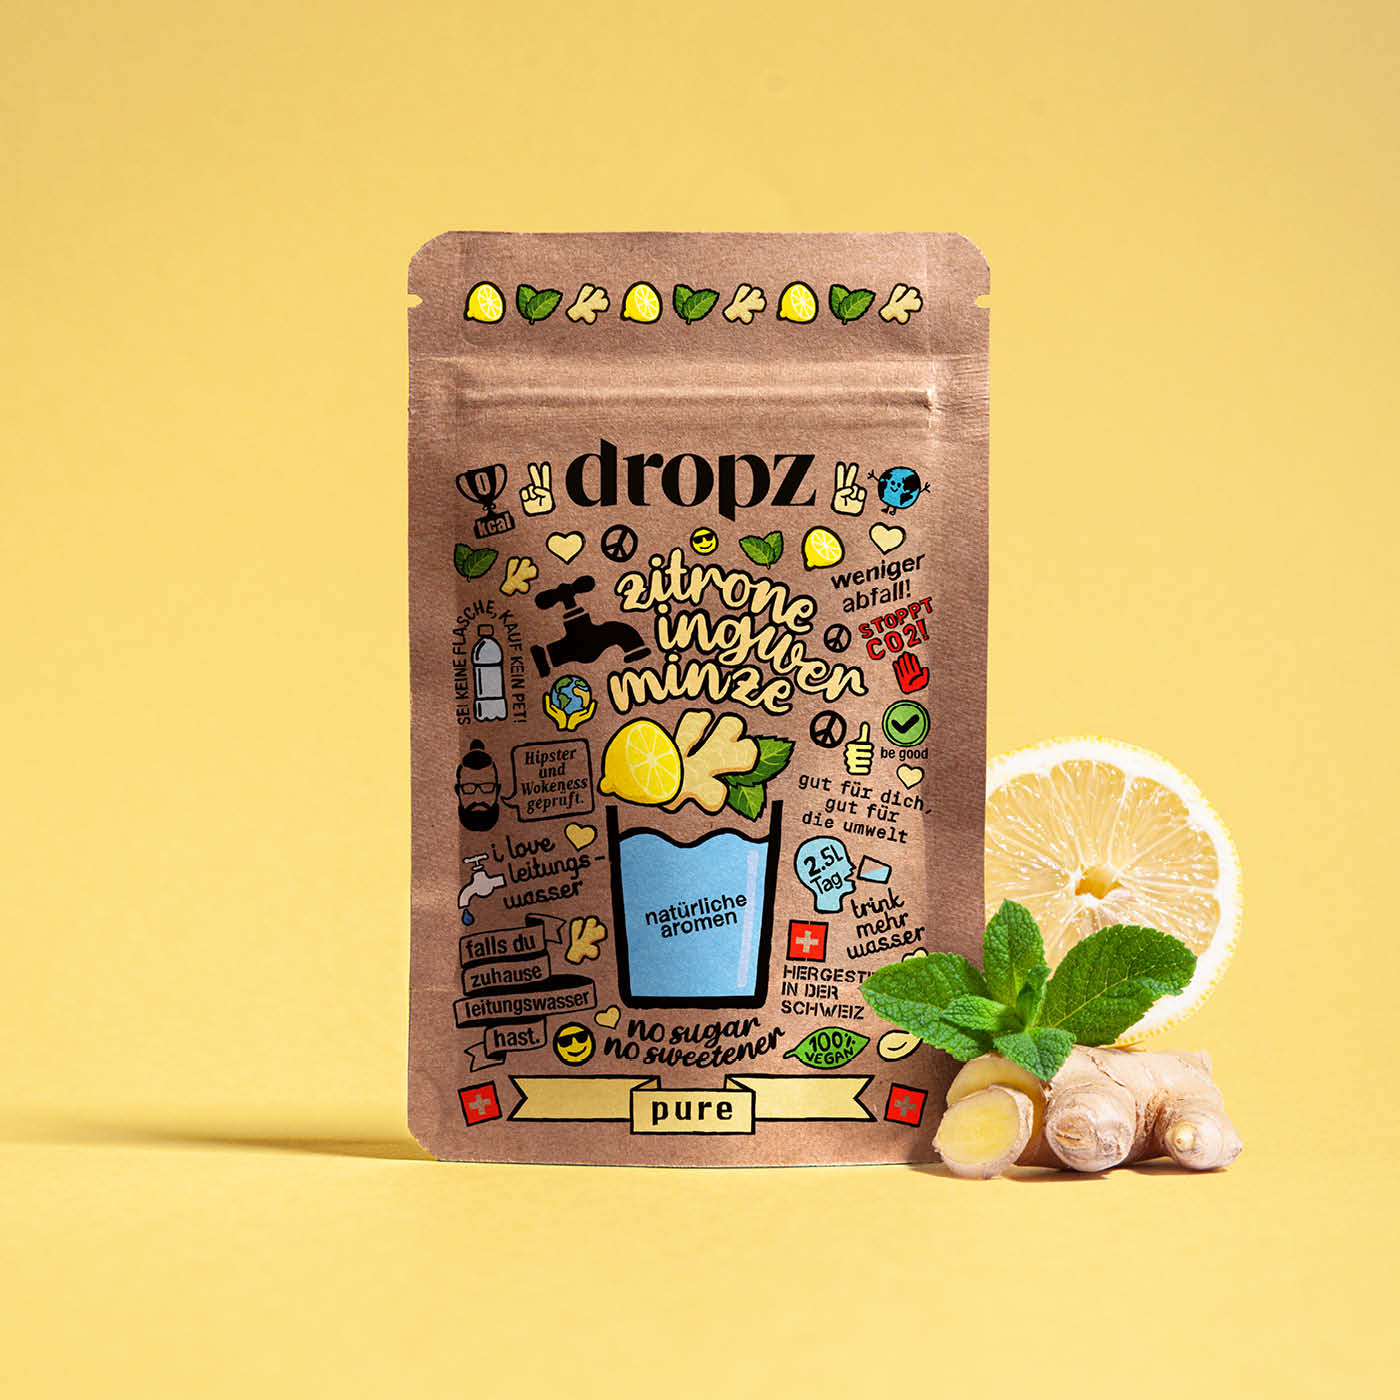 dropz - Apple Lemon